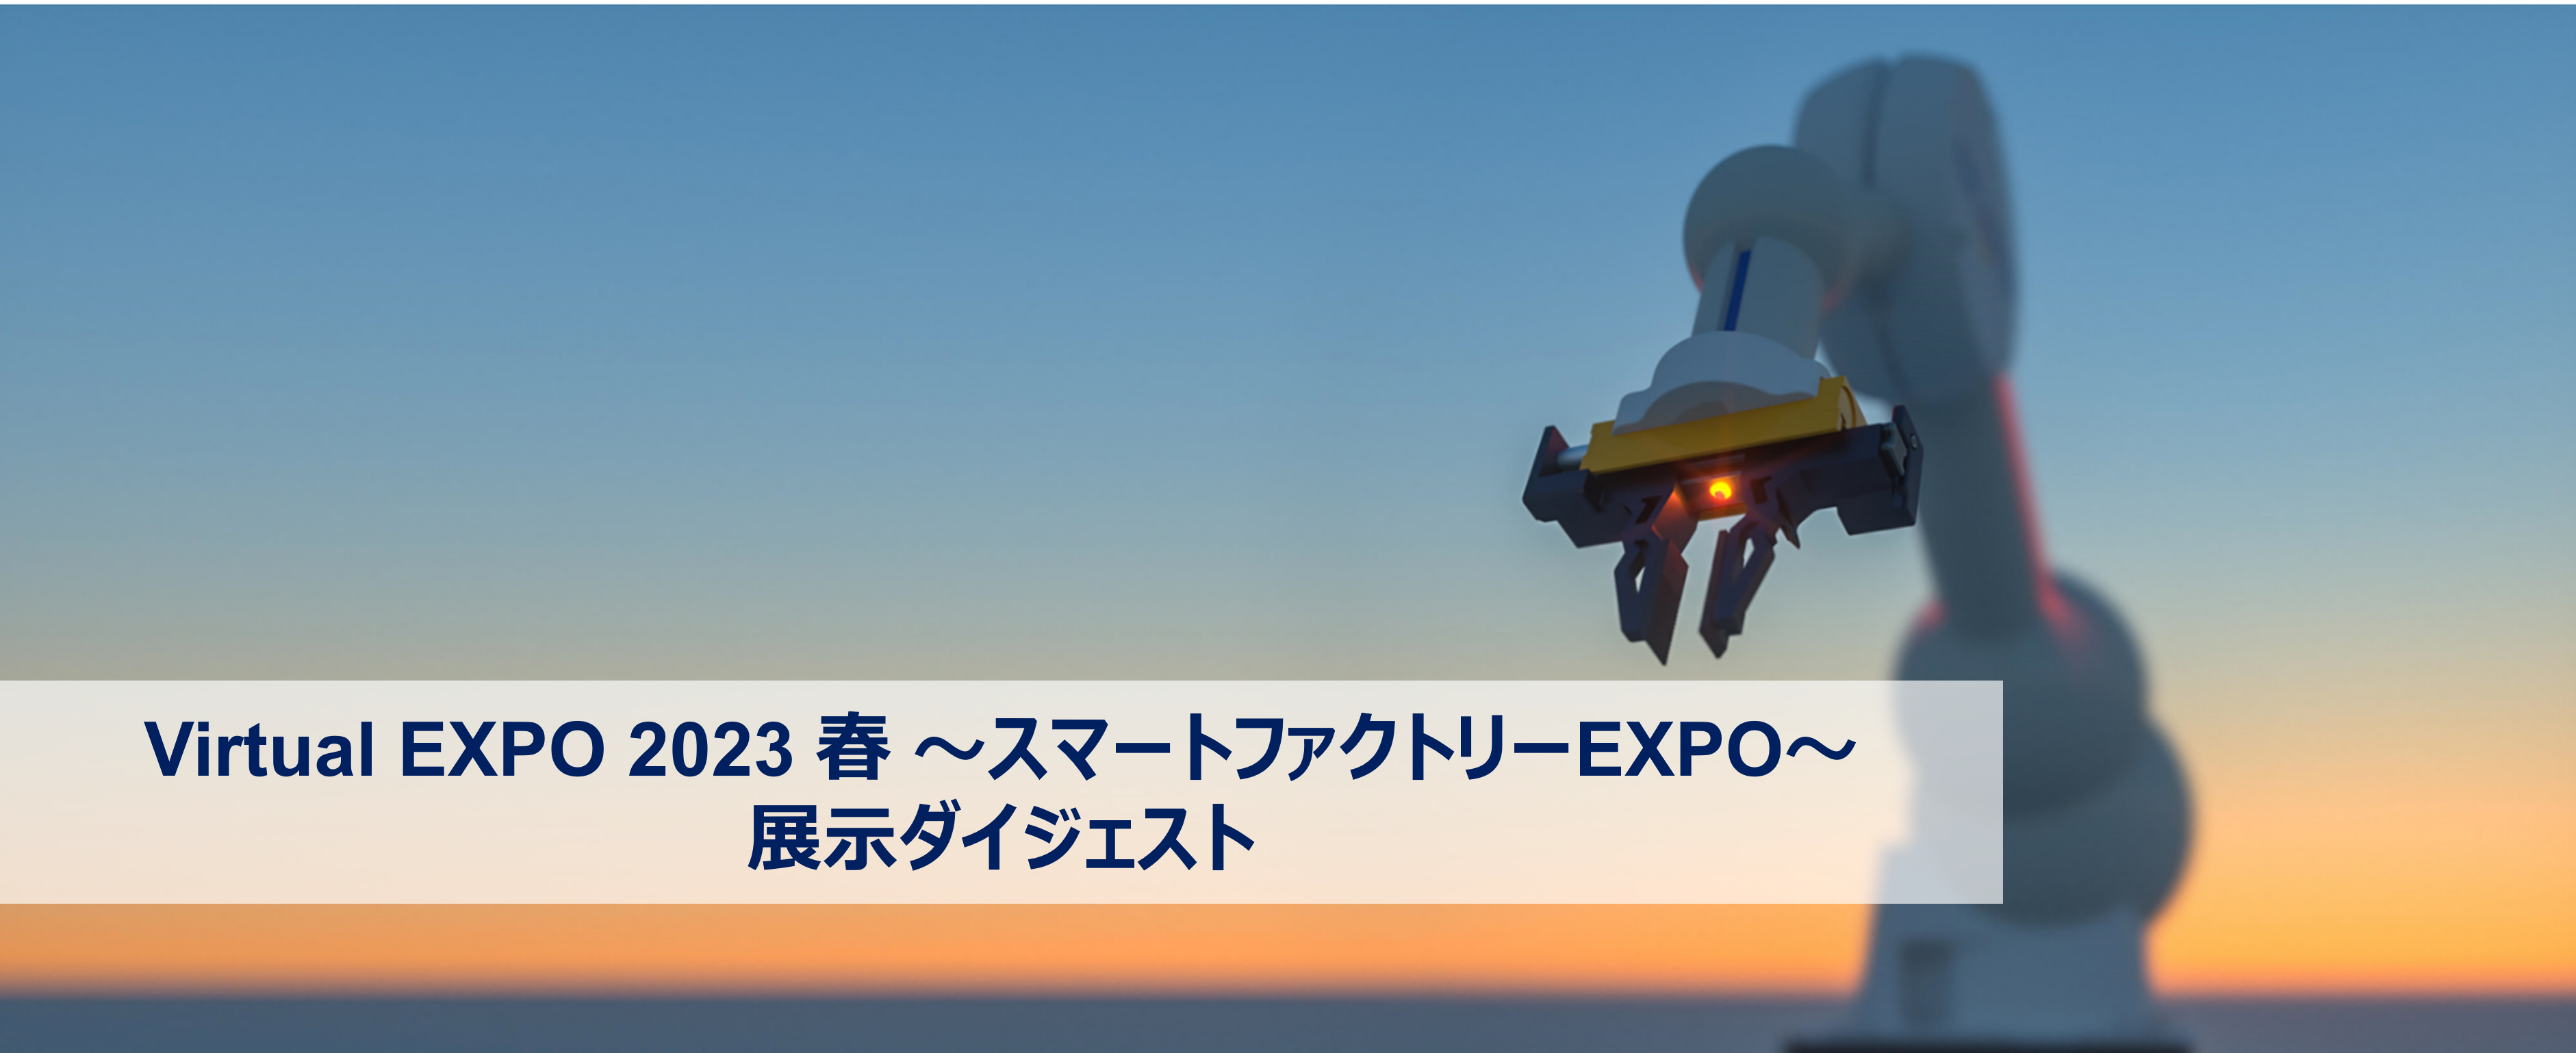 Virtual EXPO 2023 春 ～スマートファクトリーEXPO～ 展示ダイジェスト